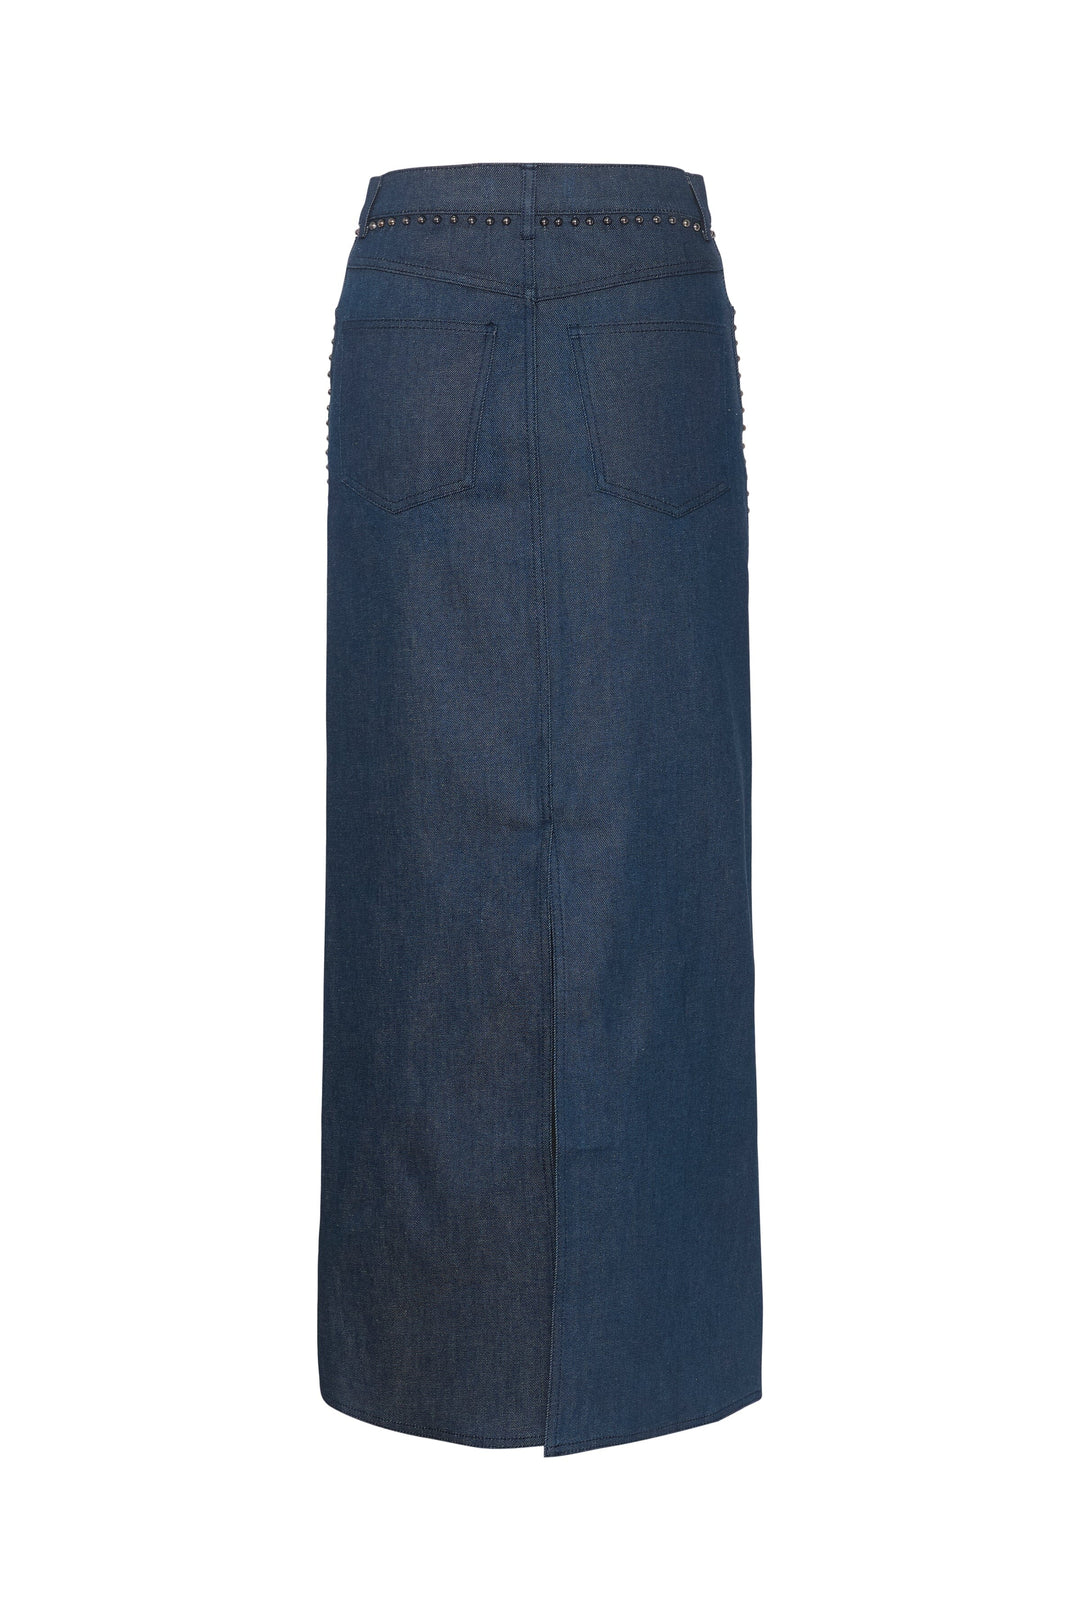 Gestuz - RockieGZ HW long skirt - Dark blue Unwashed Nederdele 